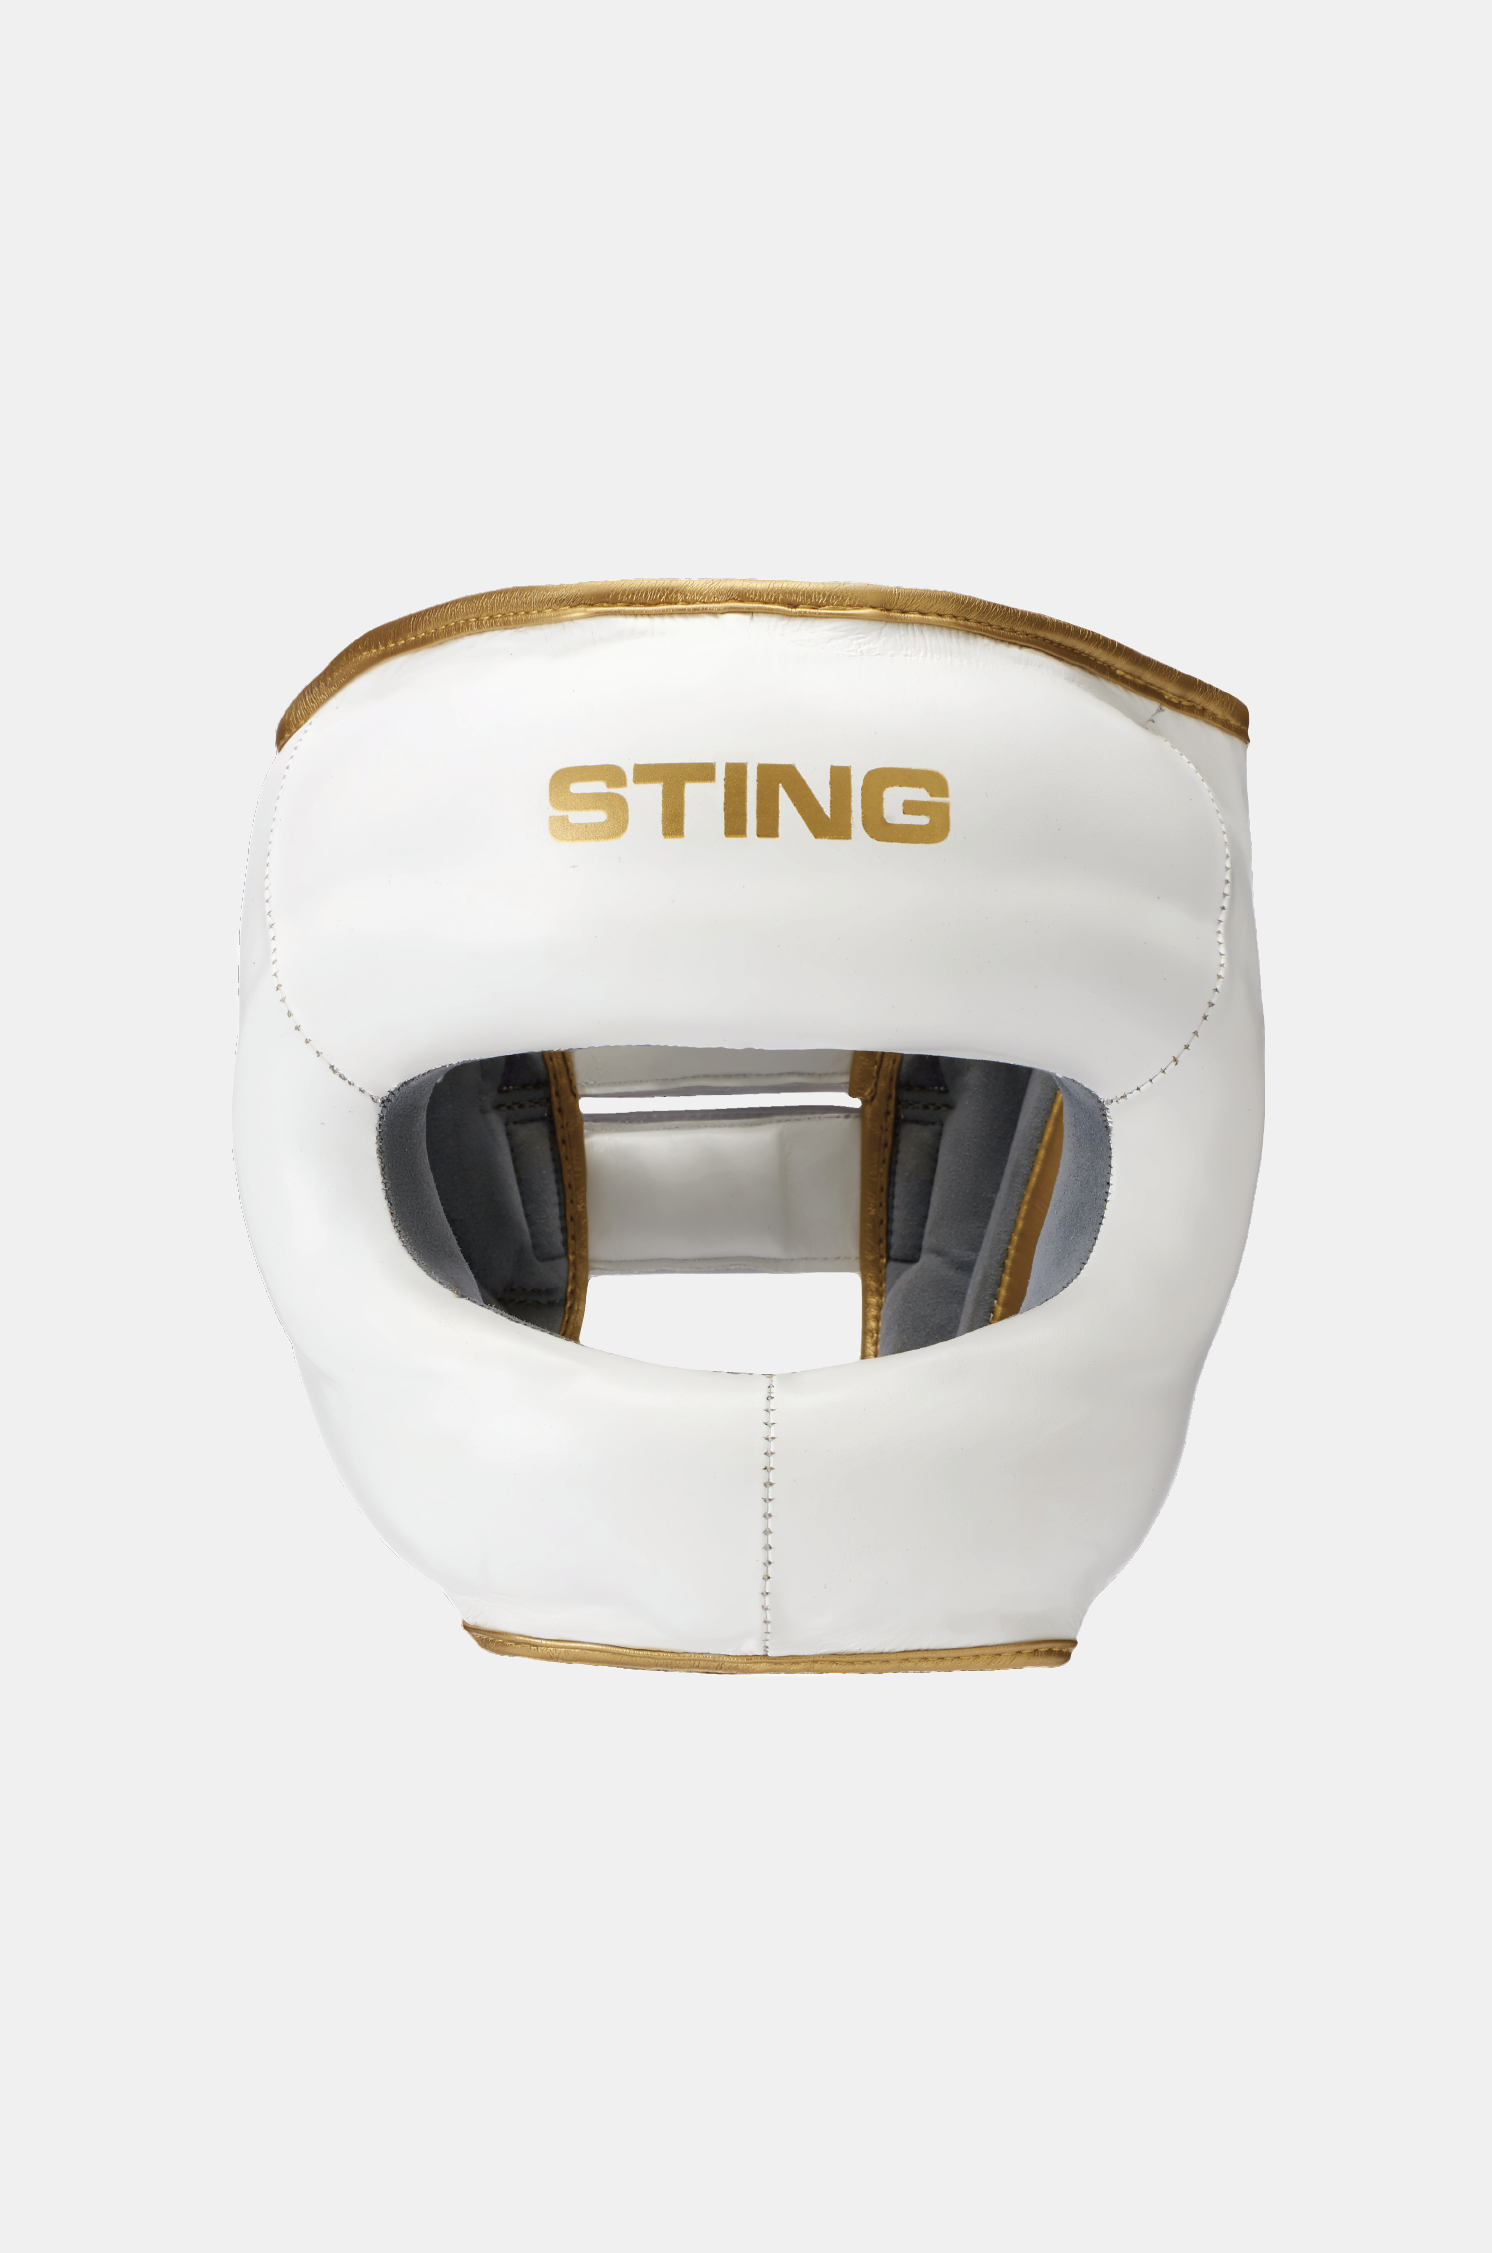 STING Evolution Full Face Shield Guard White Gold